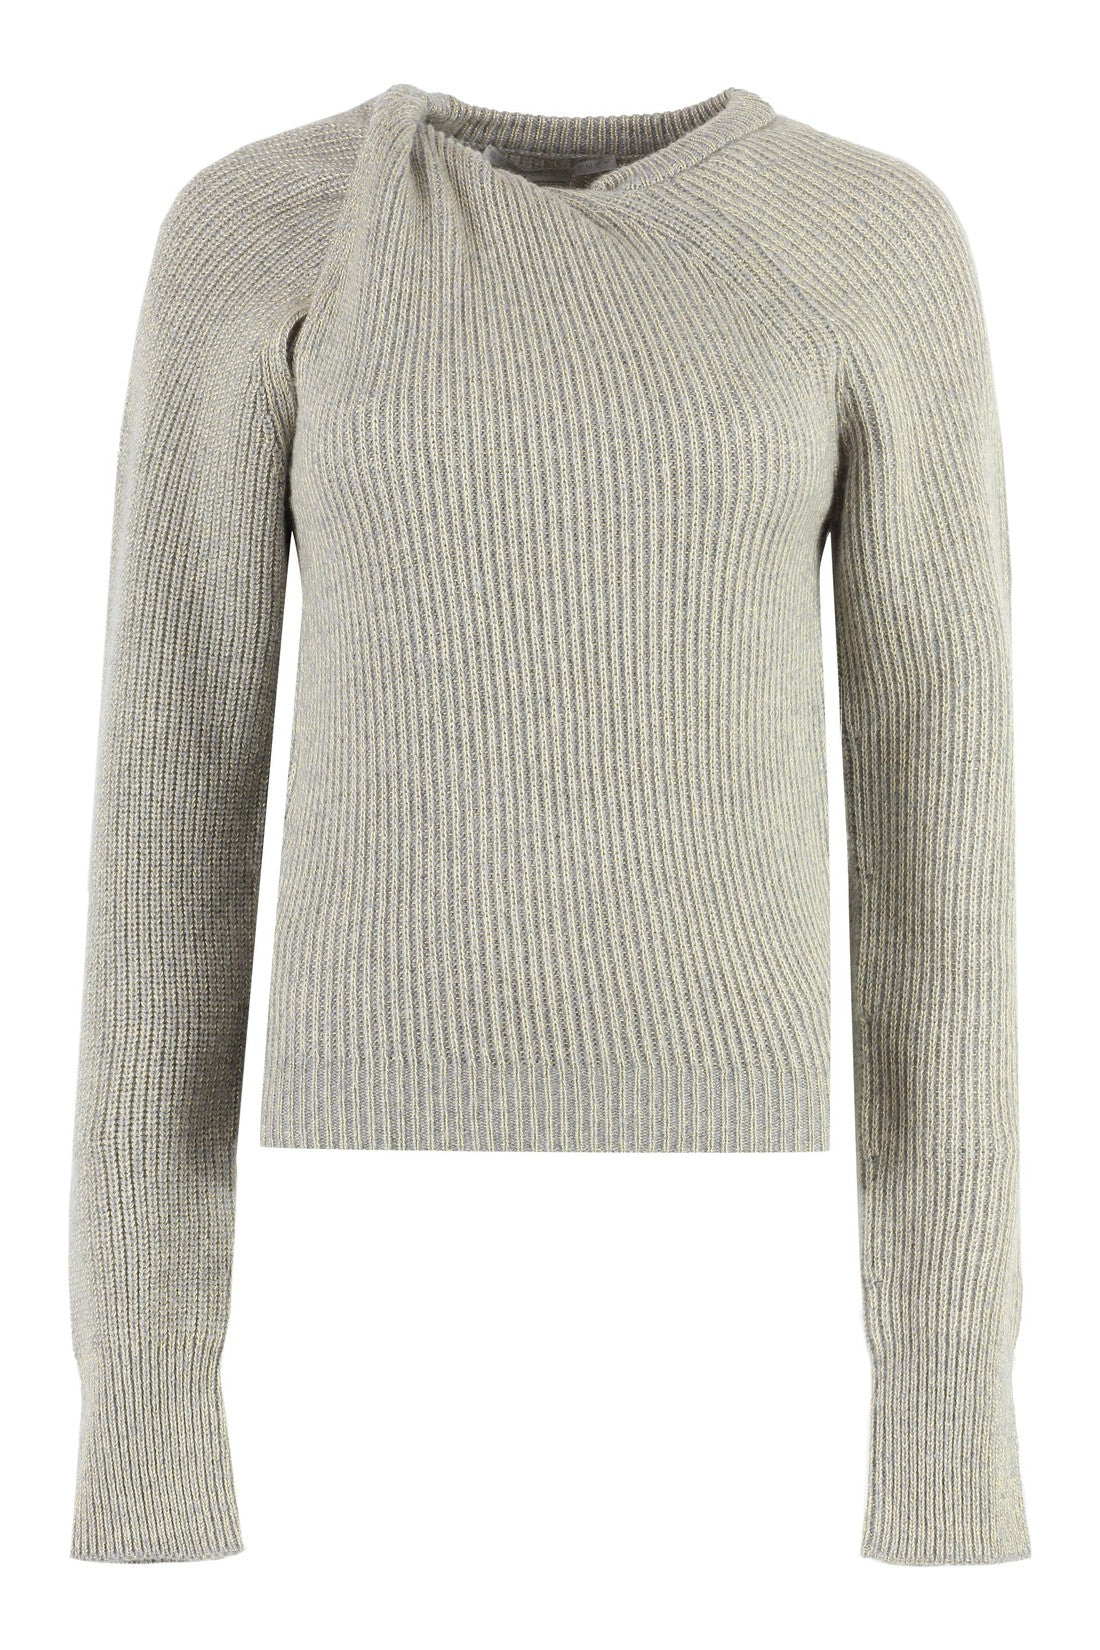 Stella McCartney-OUTLET-SALE-Cashmere blend sweater-ARCHIVIST